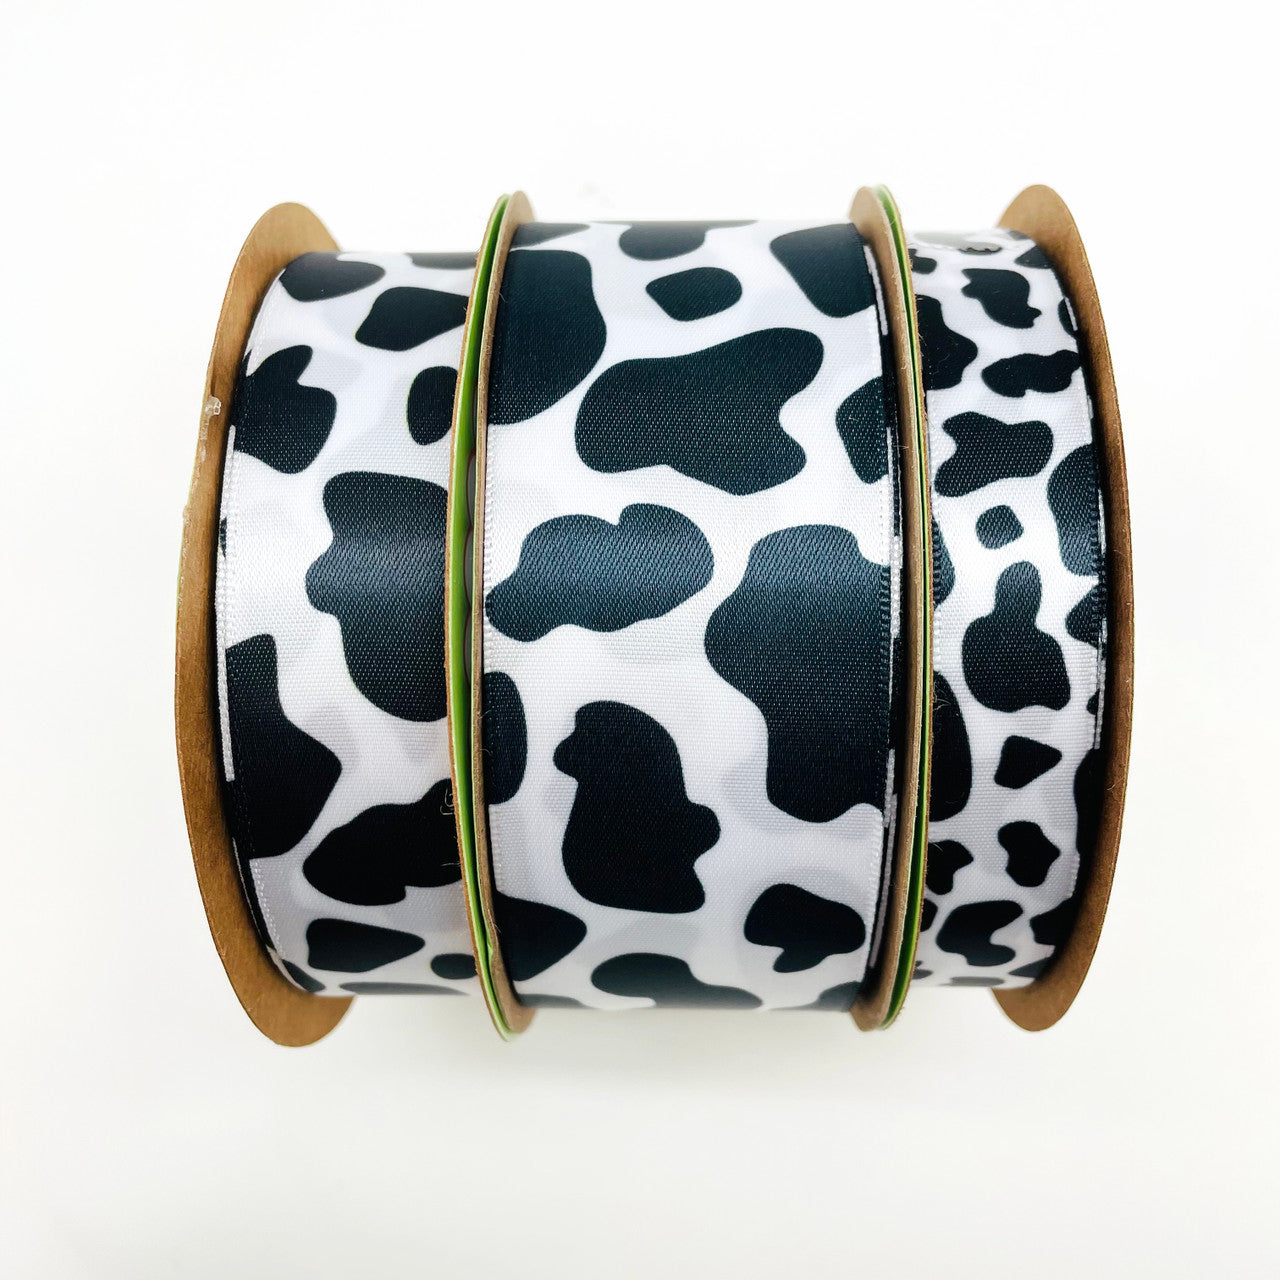 3pcs White Black Cow Print Wired Edge Ribbon Craft Ribbons Gift Wrapping Ribbon Animal Print Ribbon for Party